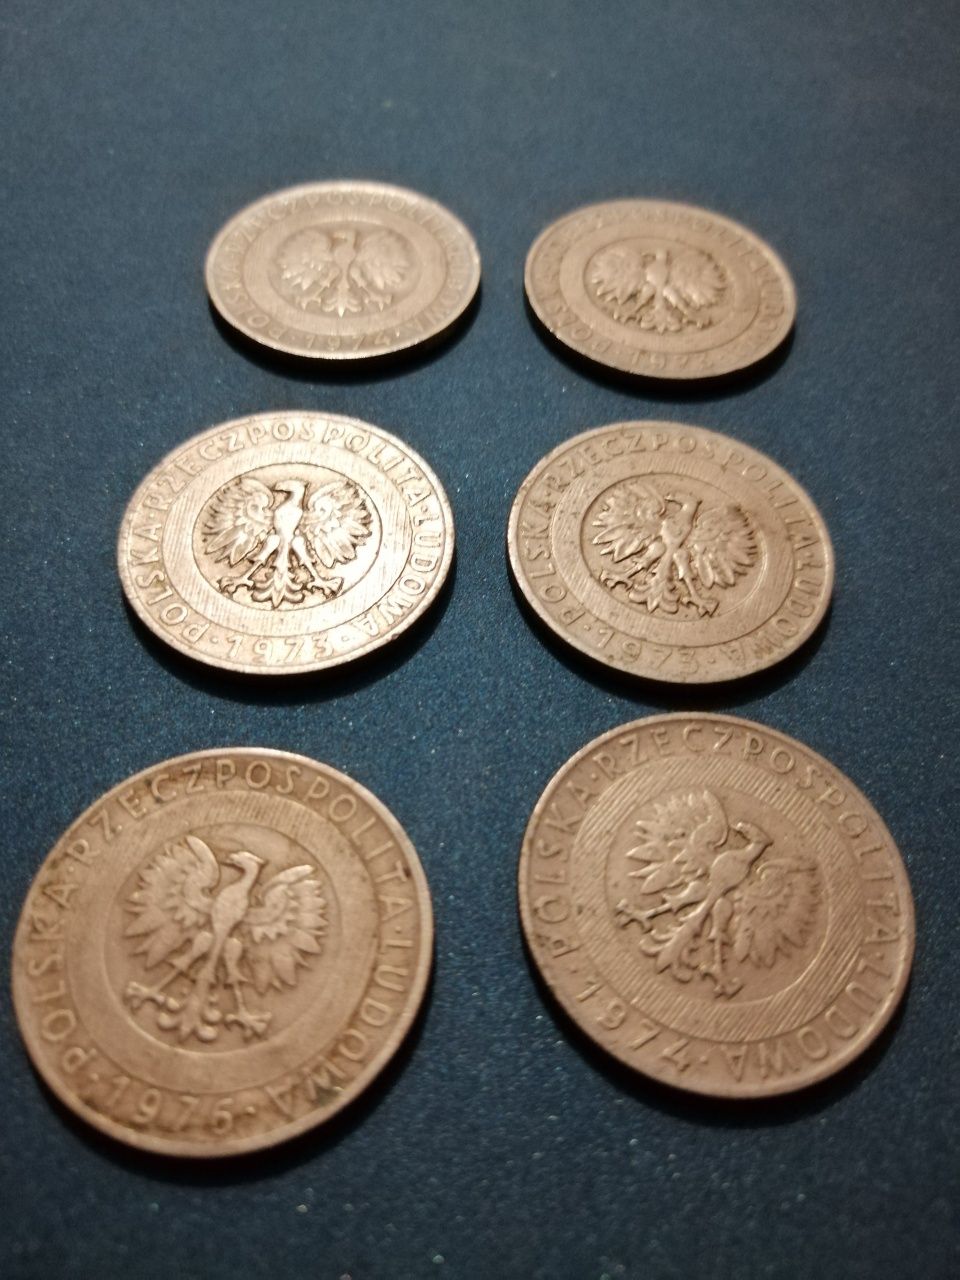 Stare monety od 1973